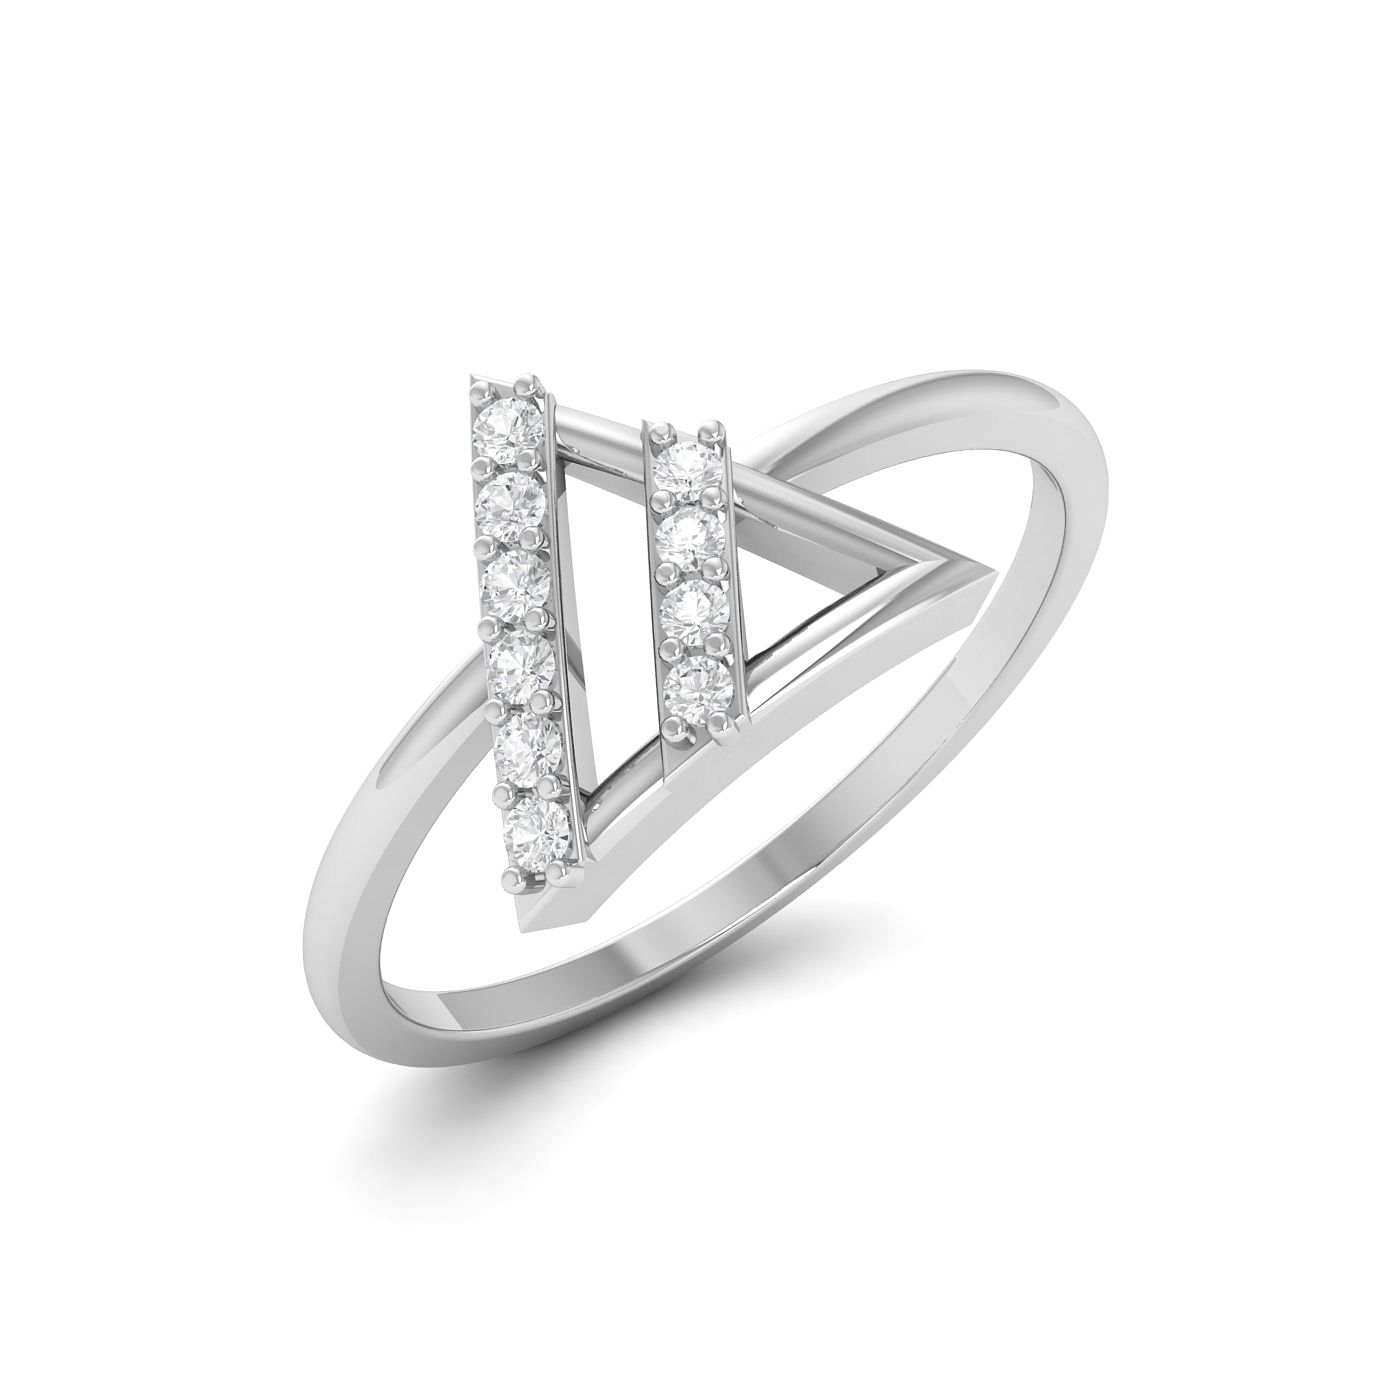 Dreieck Light weight Diamond Ring In White Gold